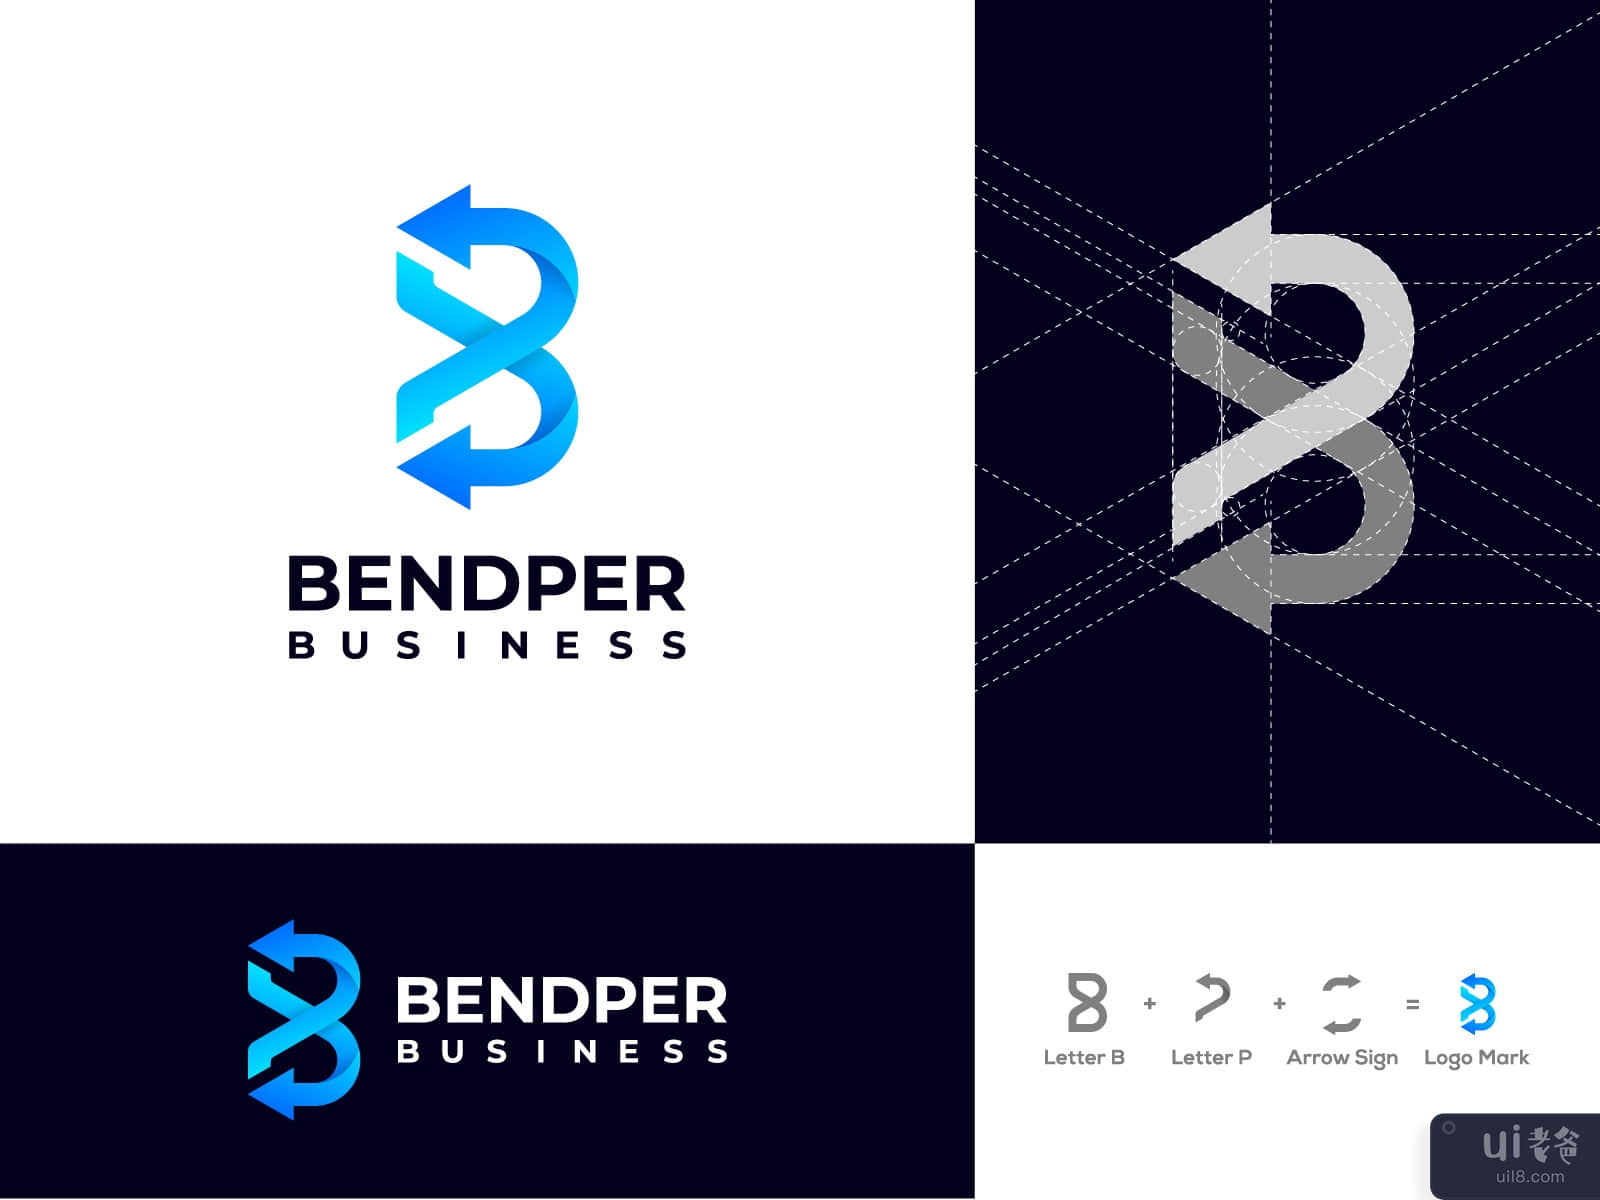 B and P Letter Business Logo Design for Bendper Business